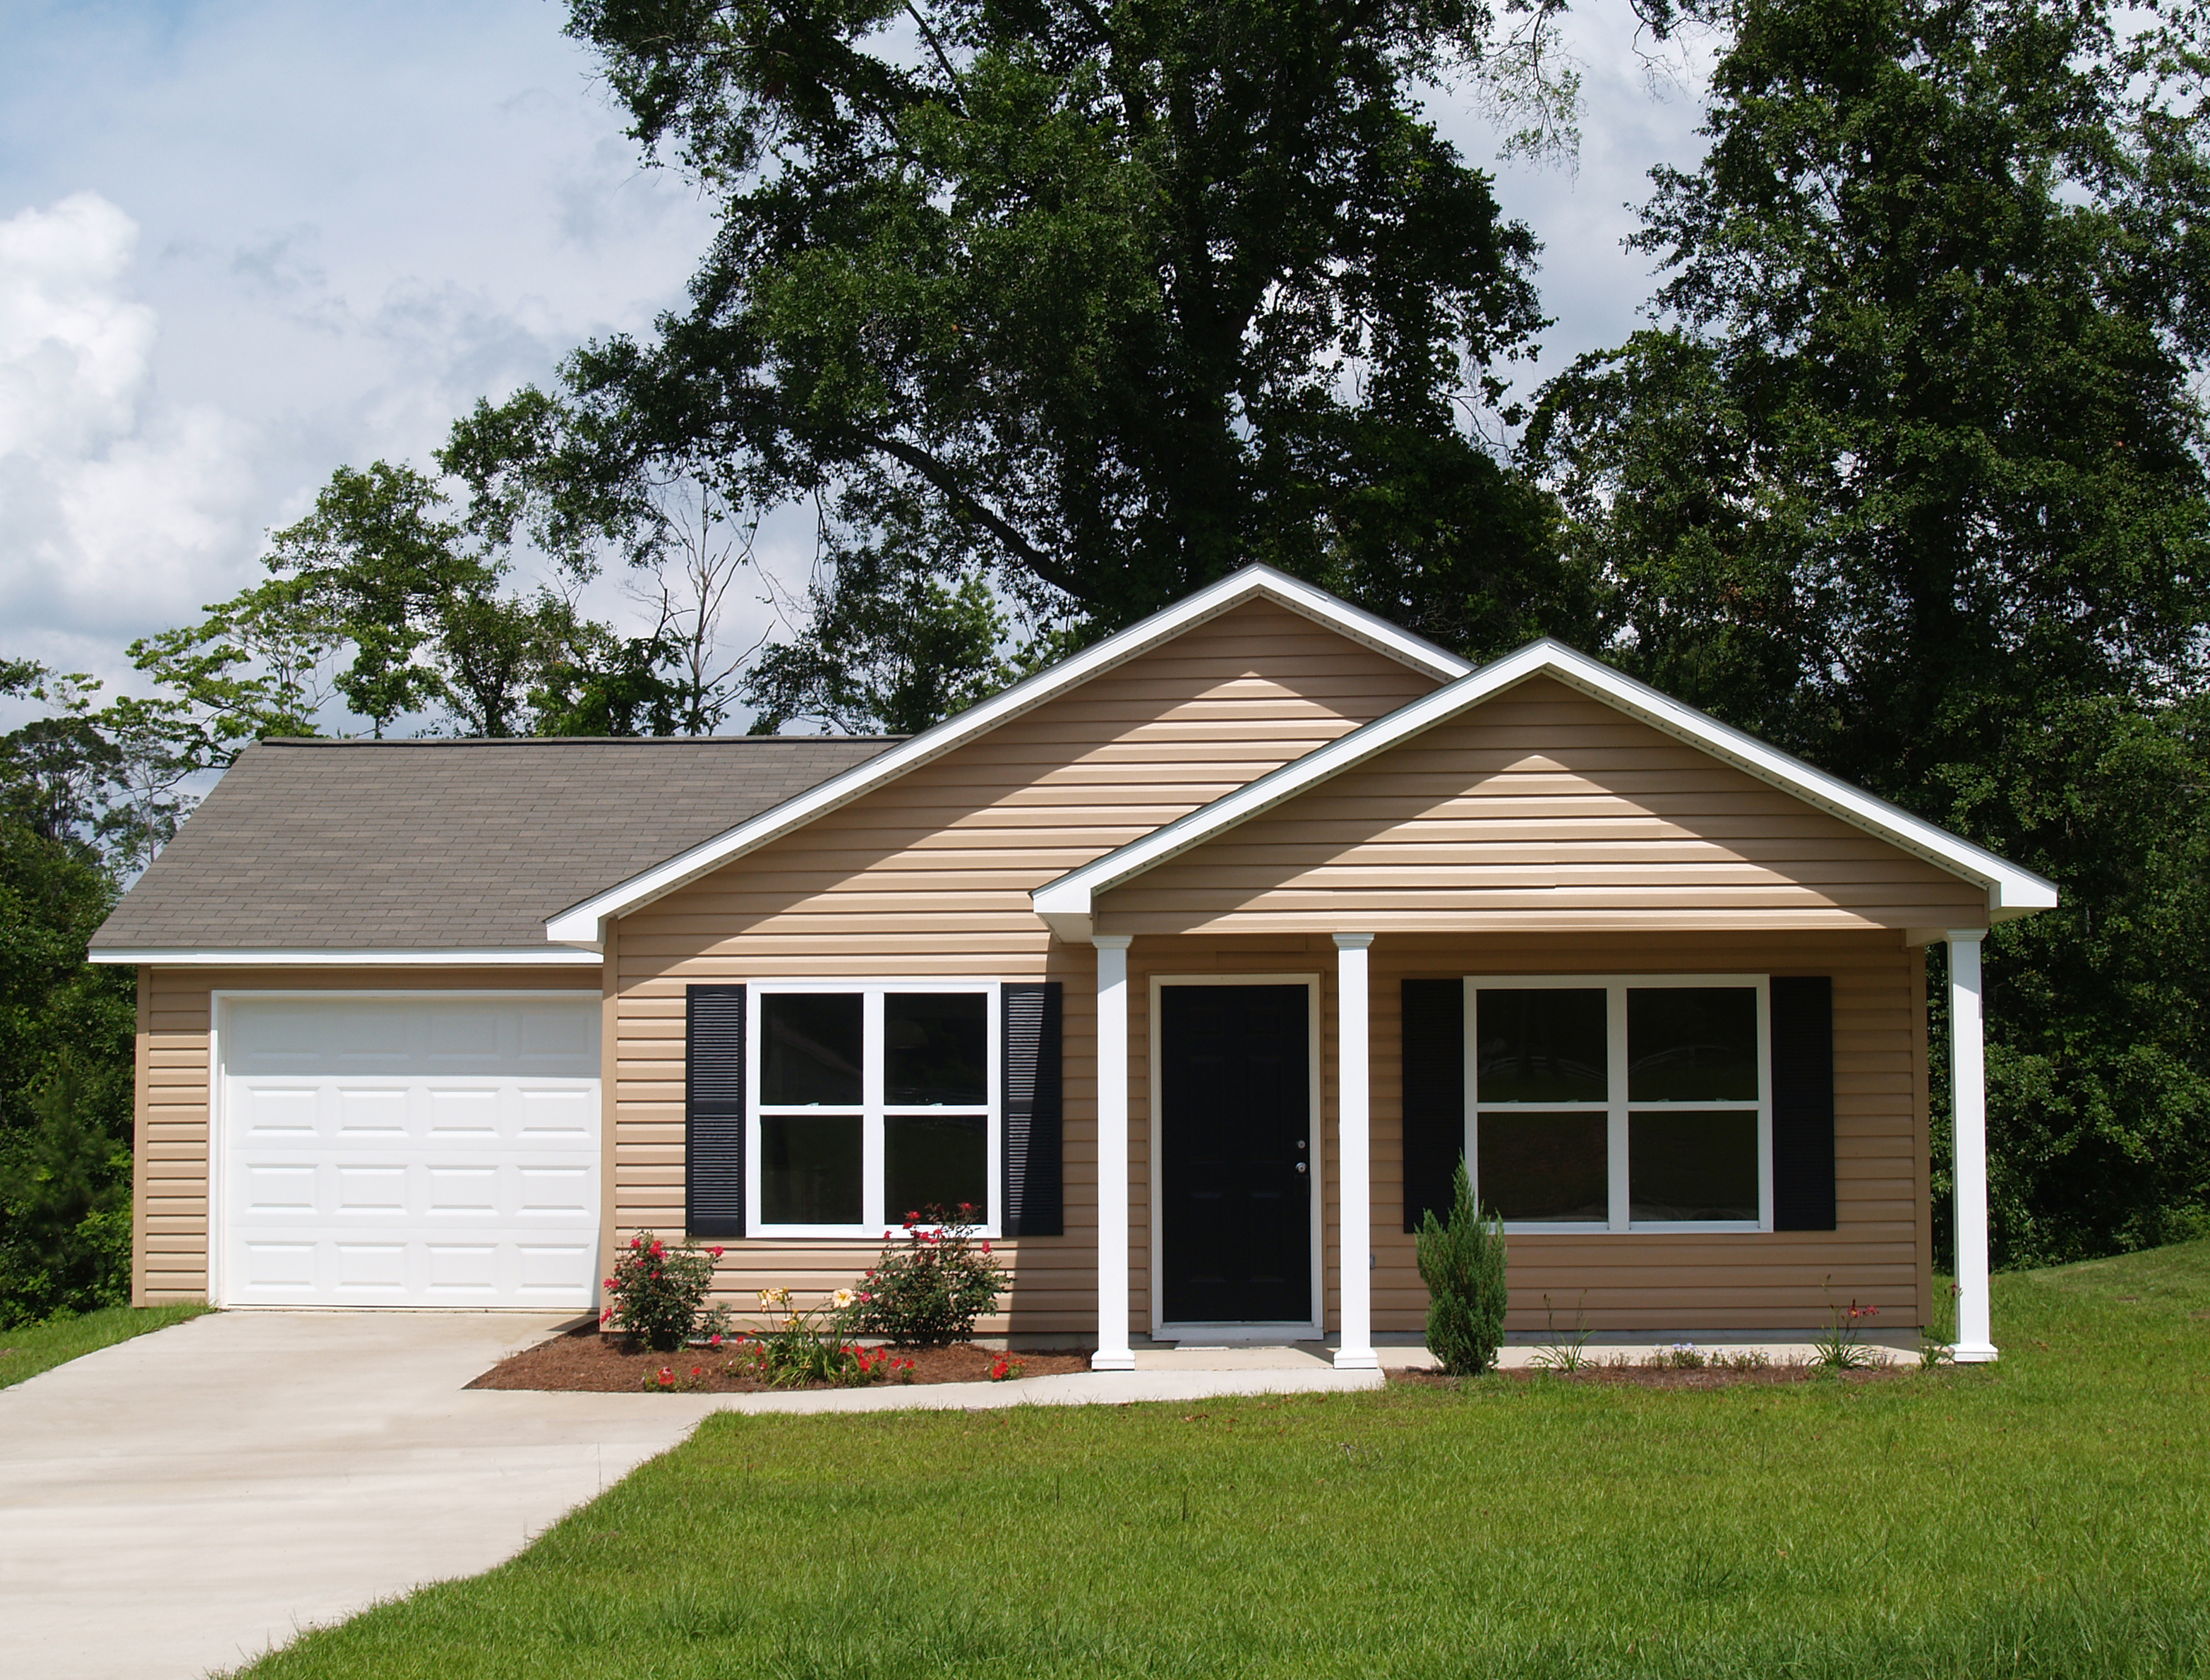 We Buy Houses Fast for Cash Kempner, TX